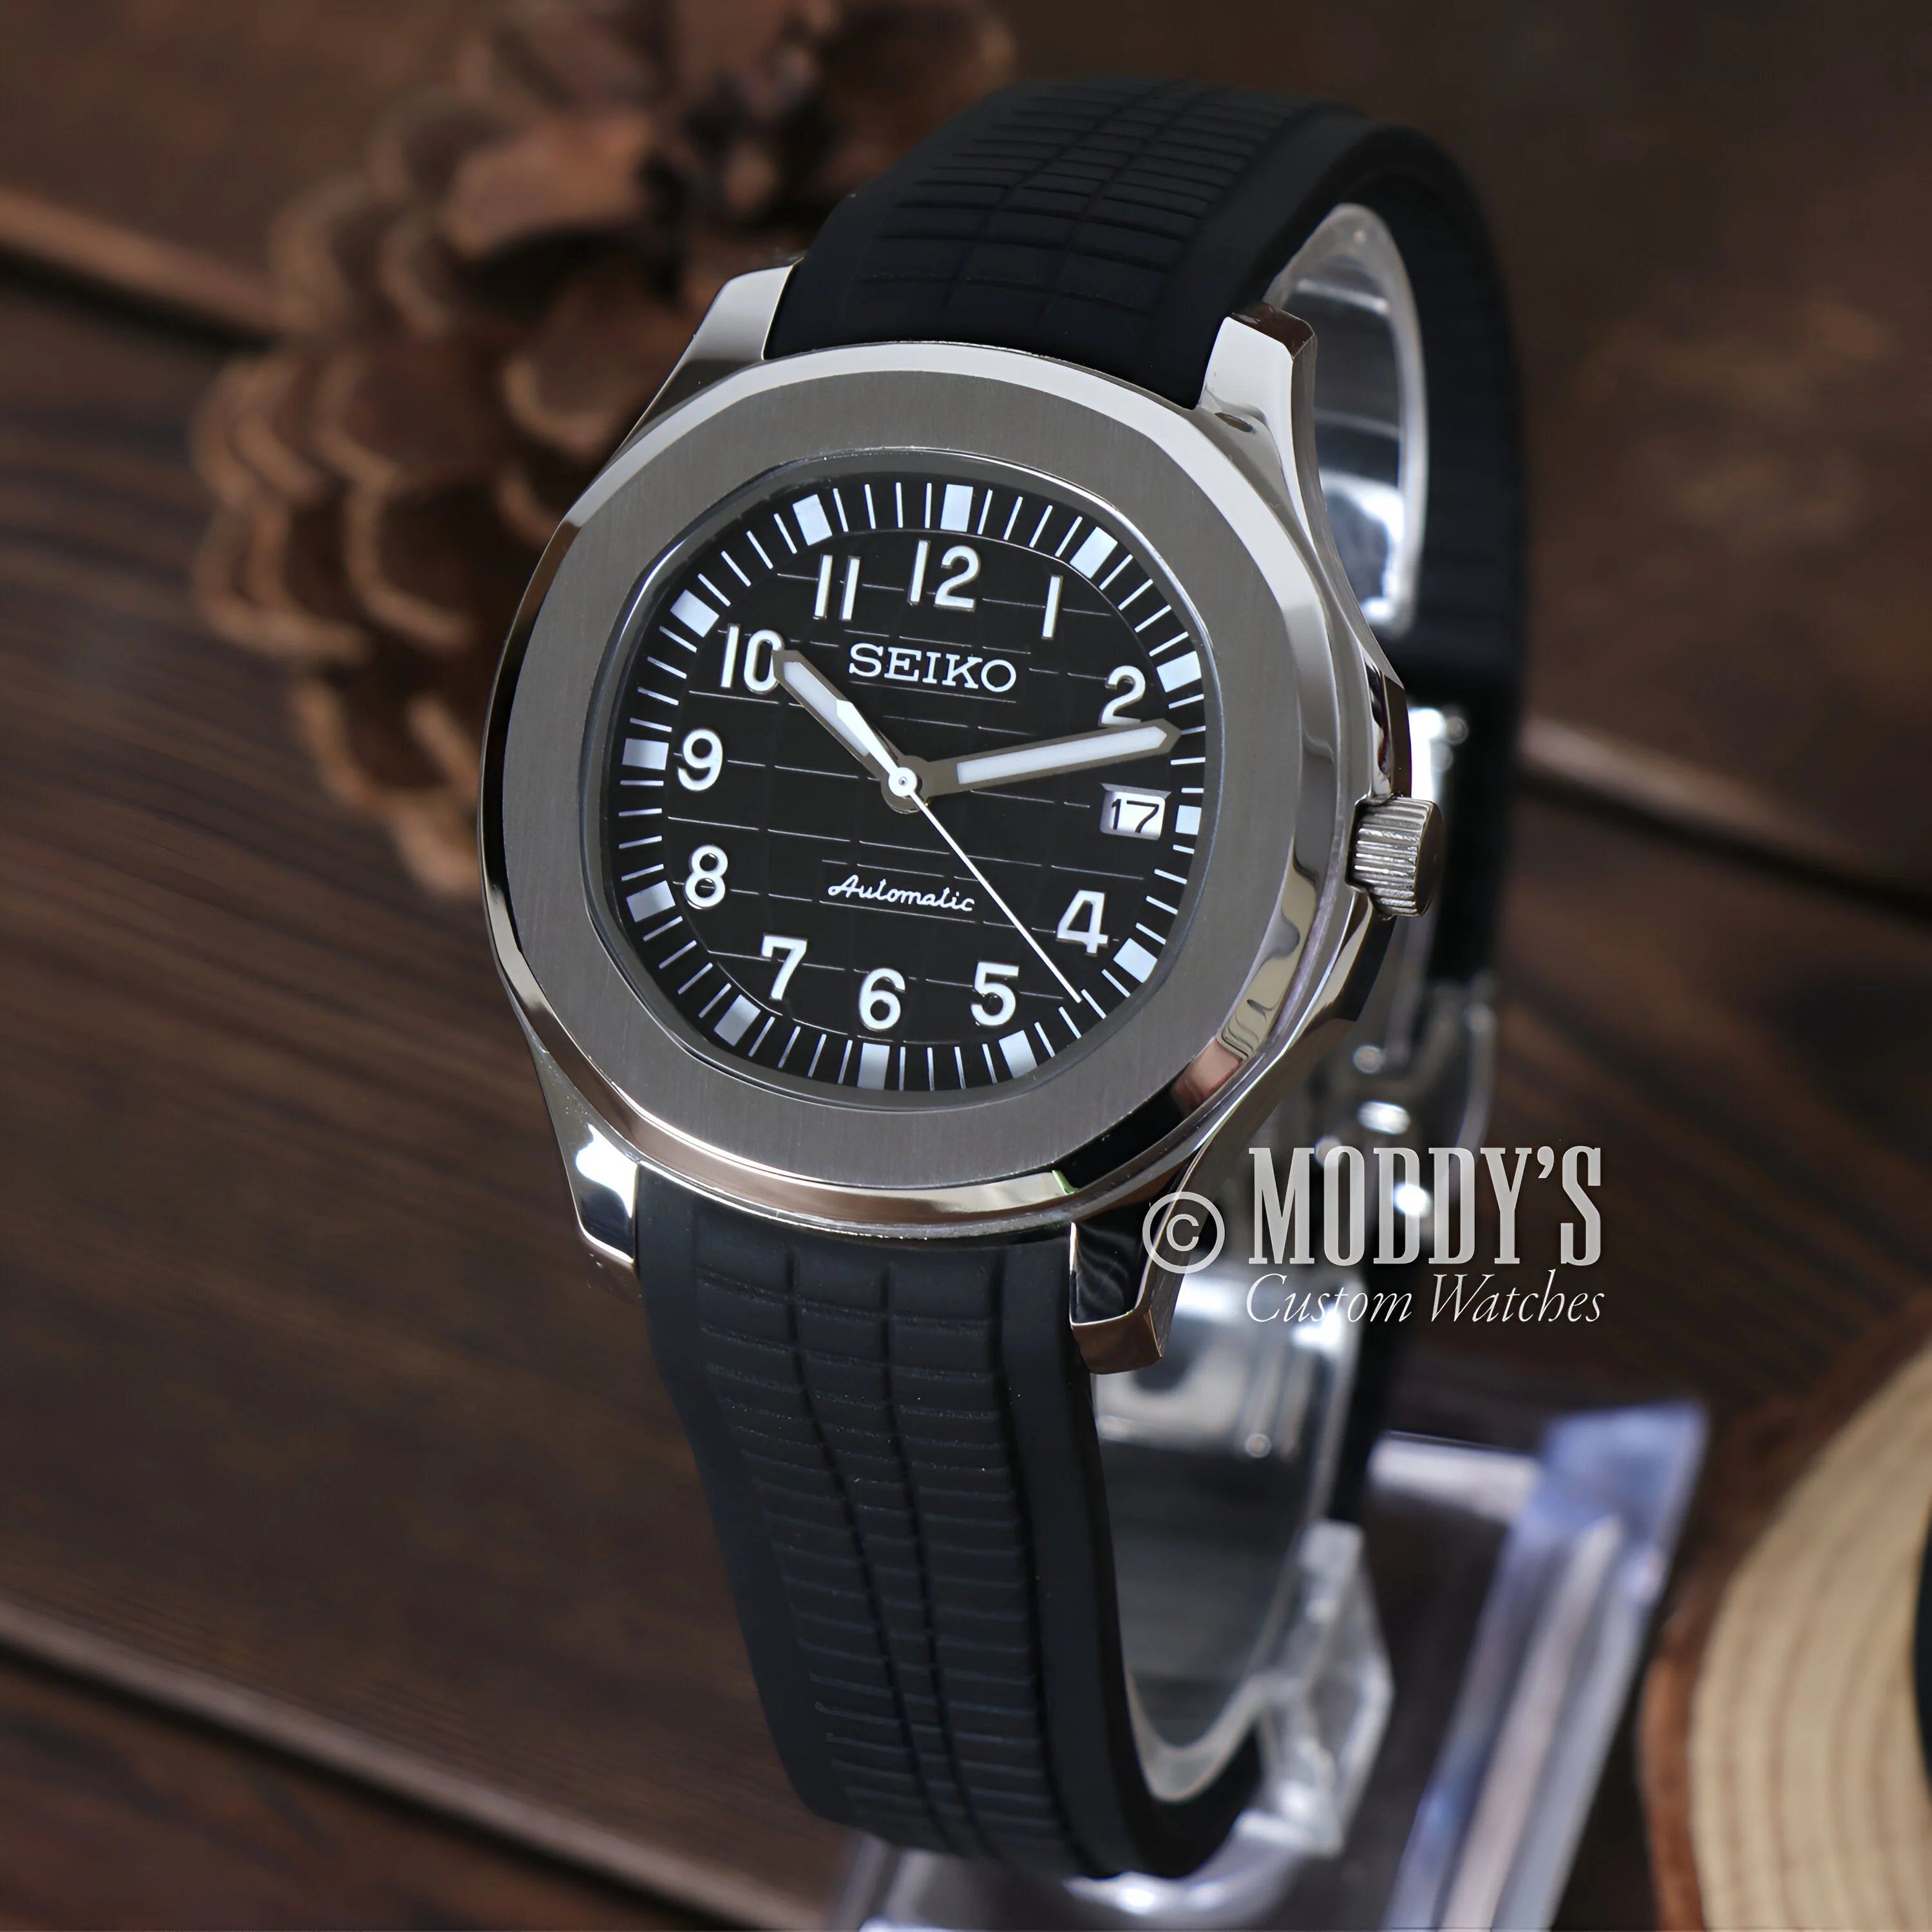 Seikonaut Black Seiko Mod Watch: Automatic Wristwatch With Black Dial And Rubber Strap